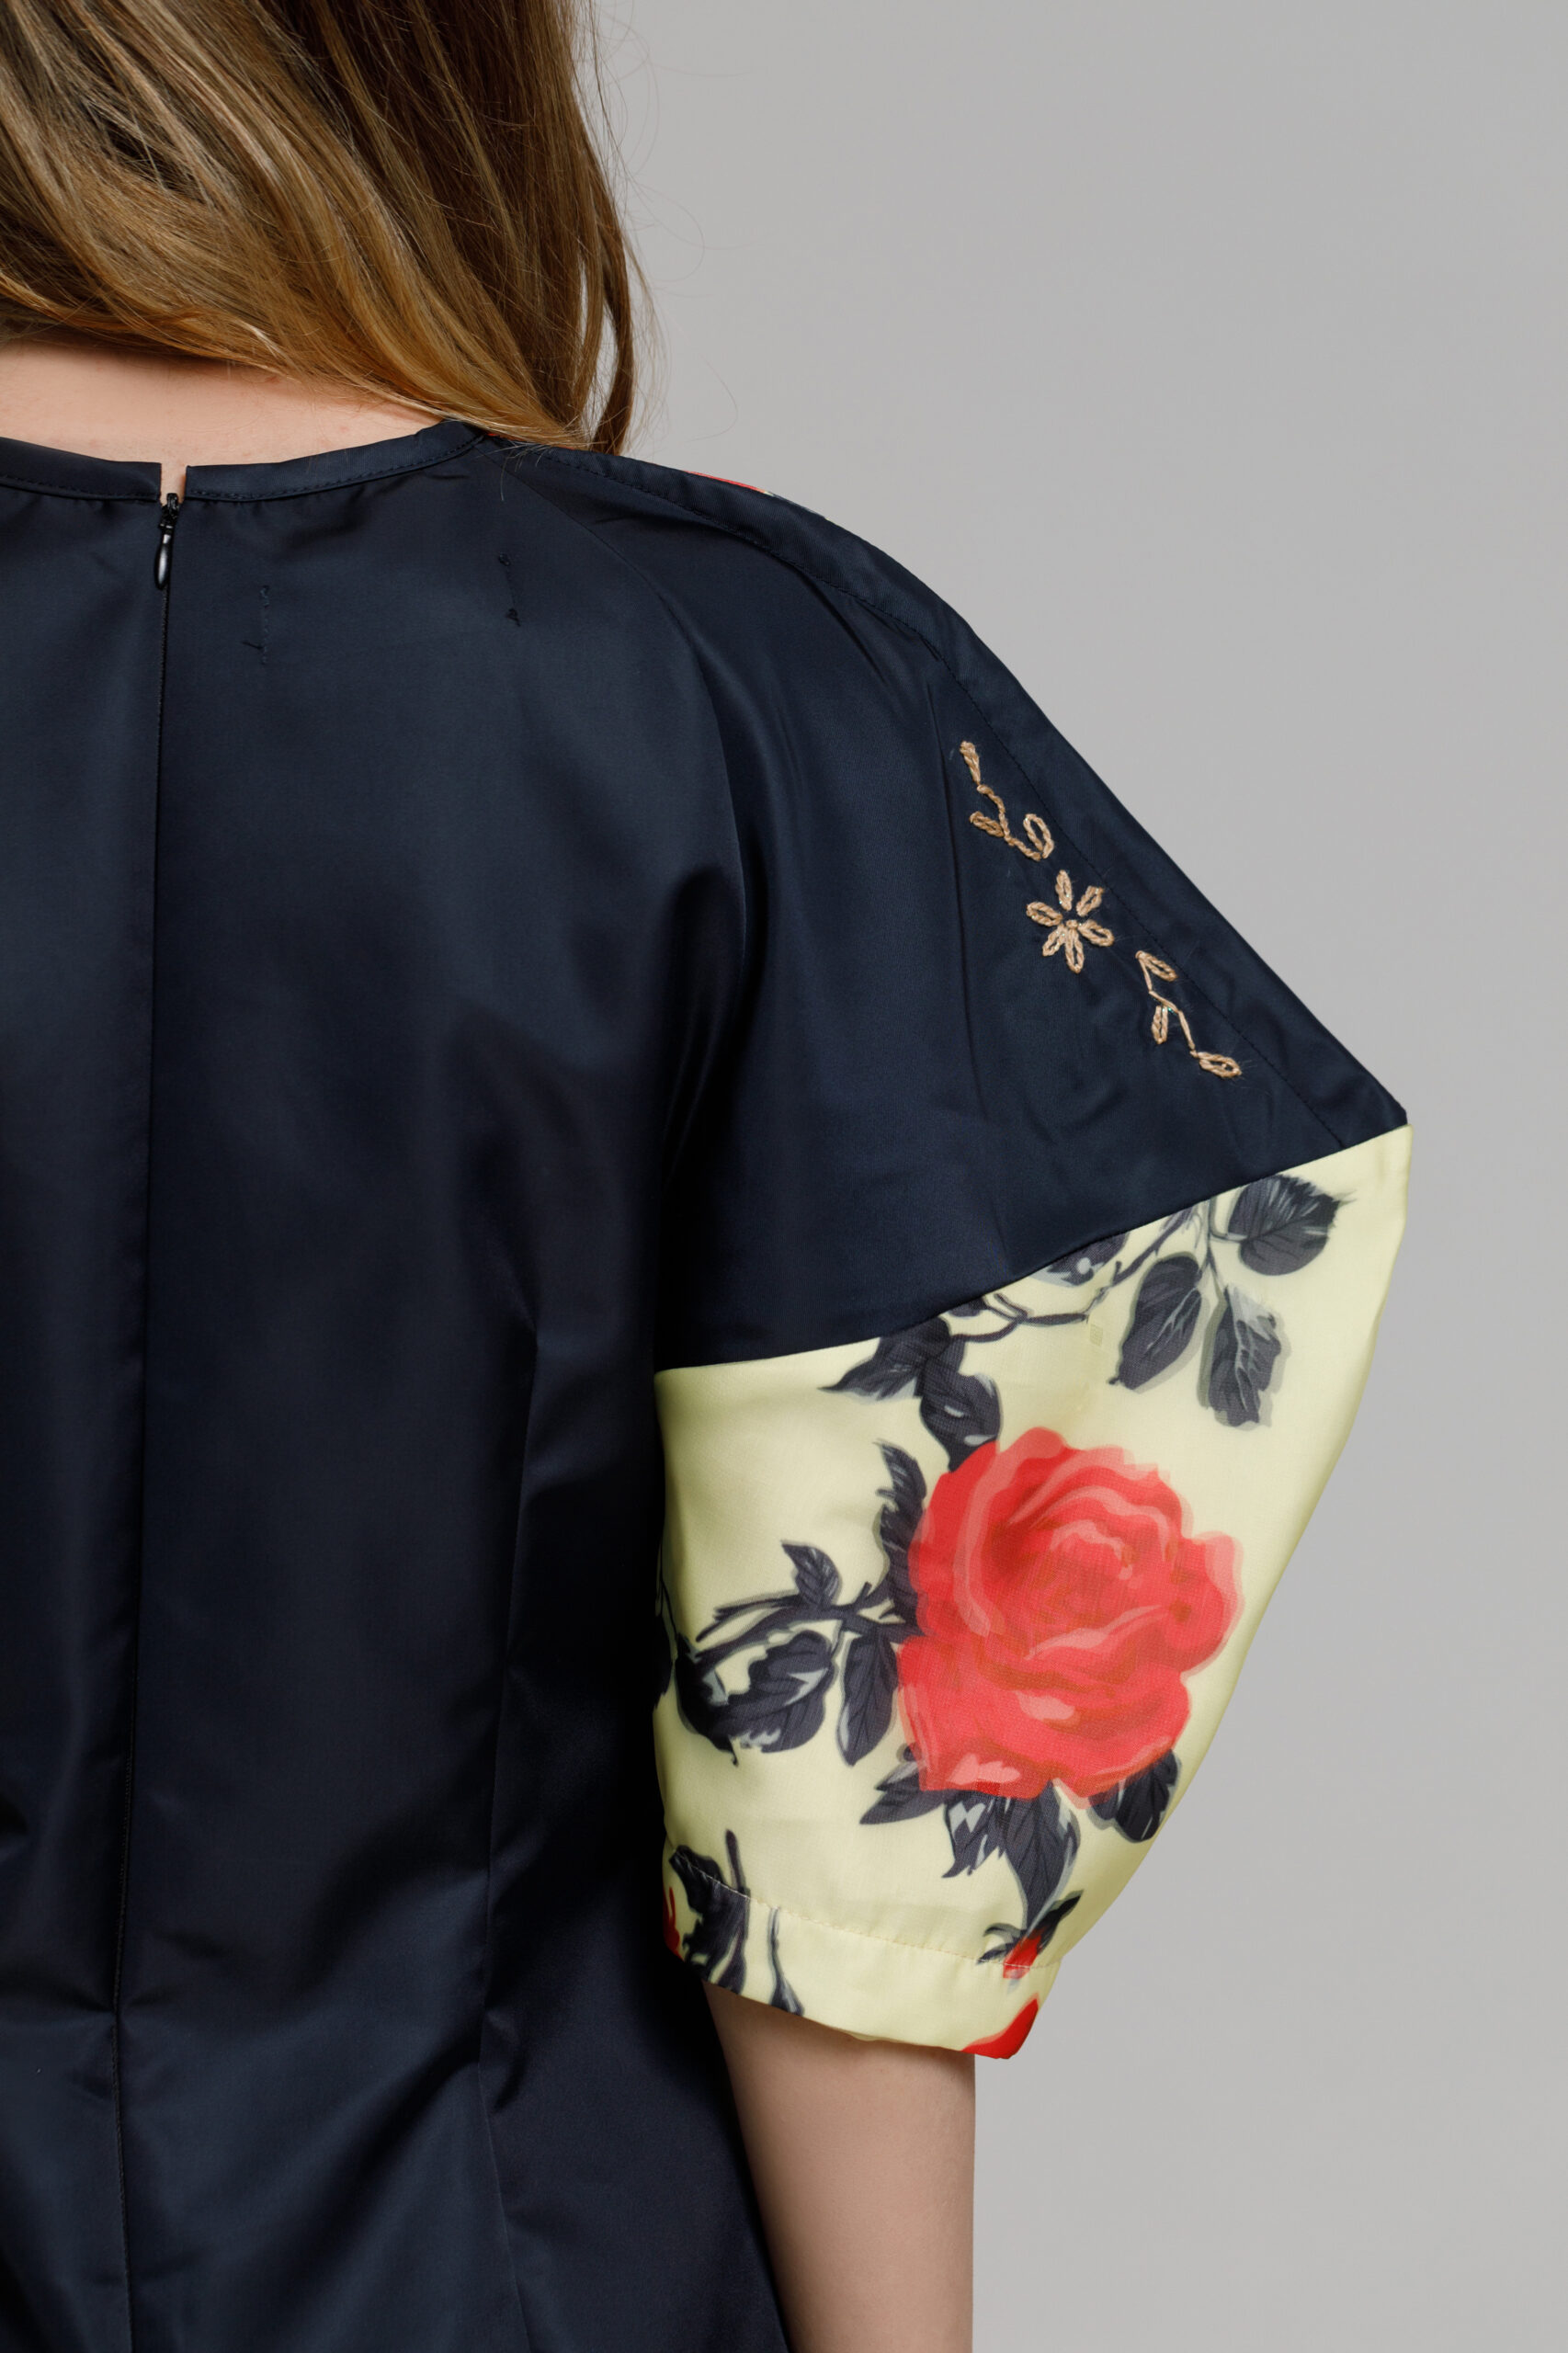 BELLA brocade dress with floral print. Natural fabrics, original design, handmade embroidery